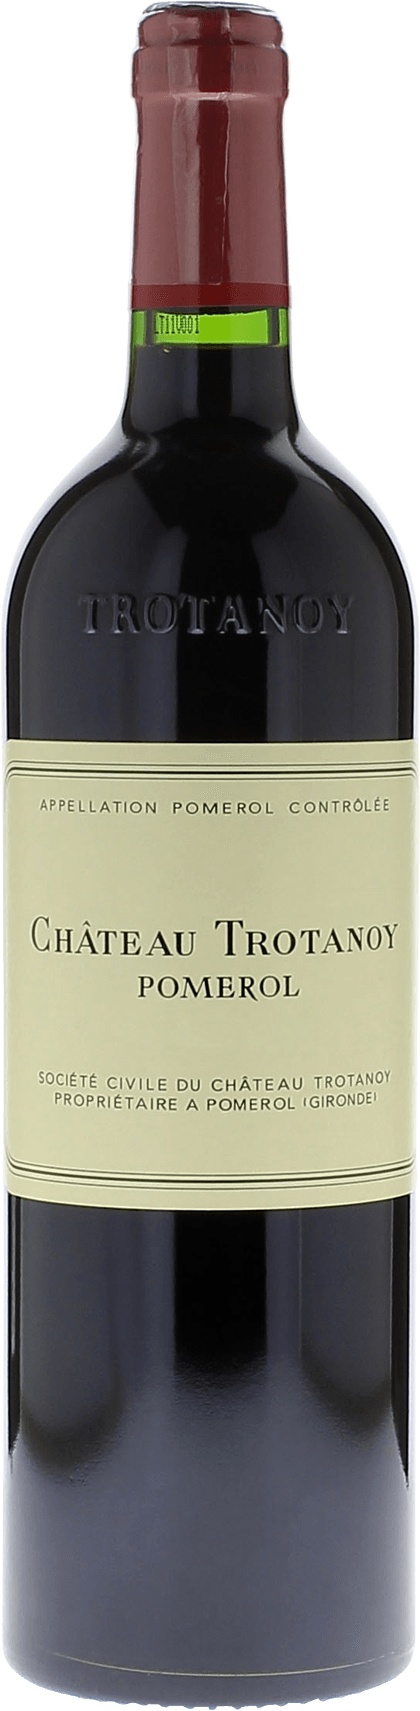 Trotanoy 2008  Pomerol, Bordeaux rouge